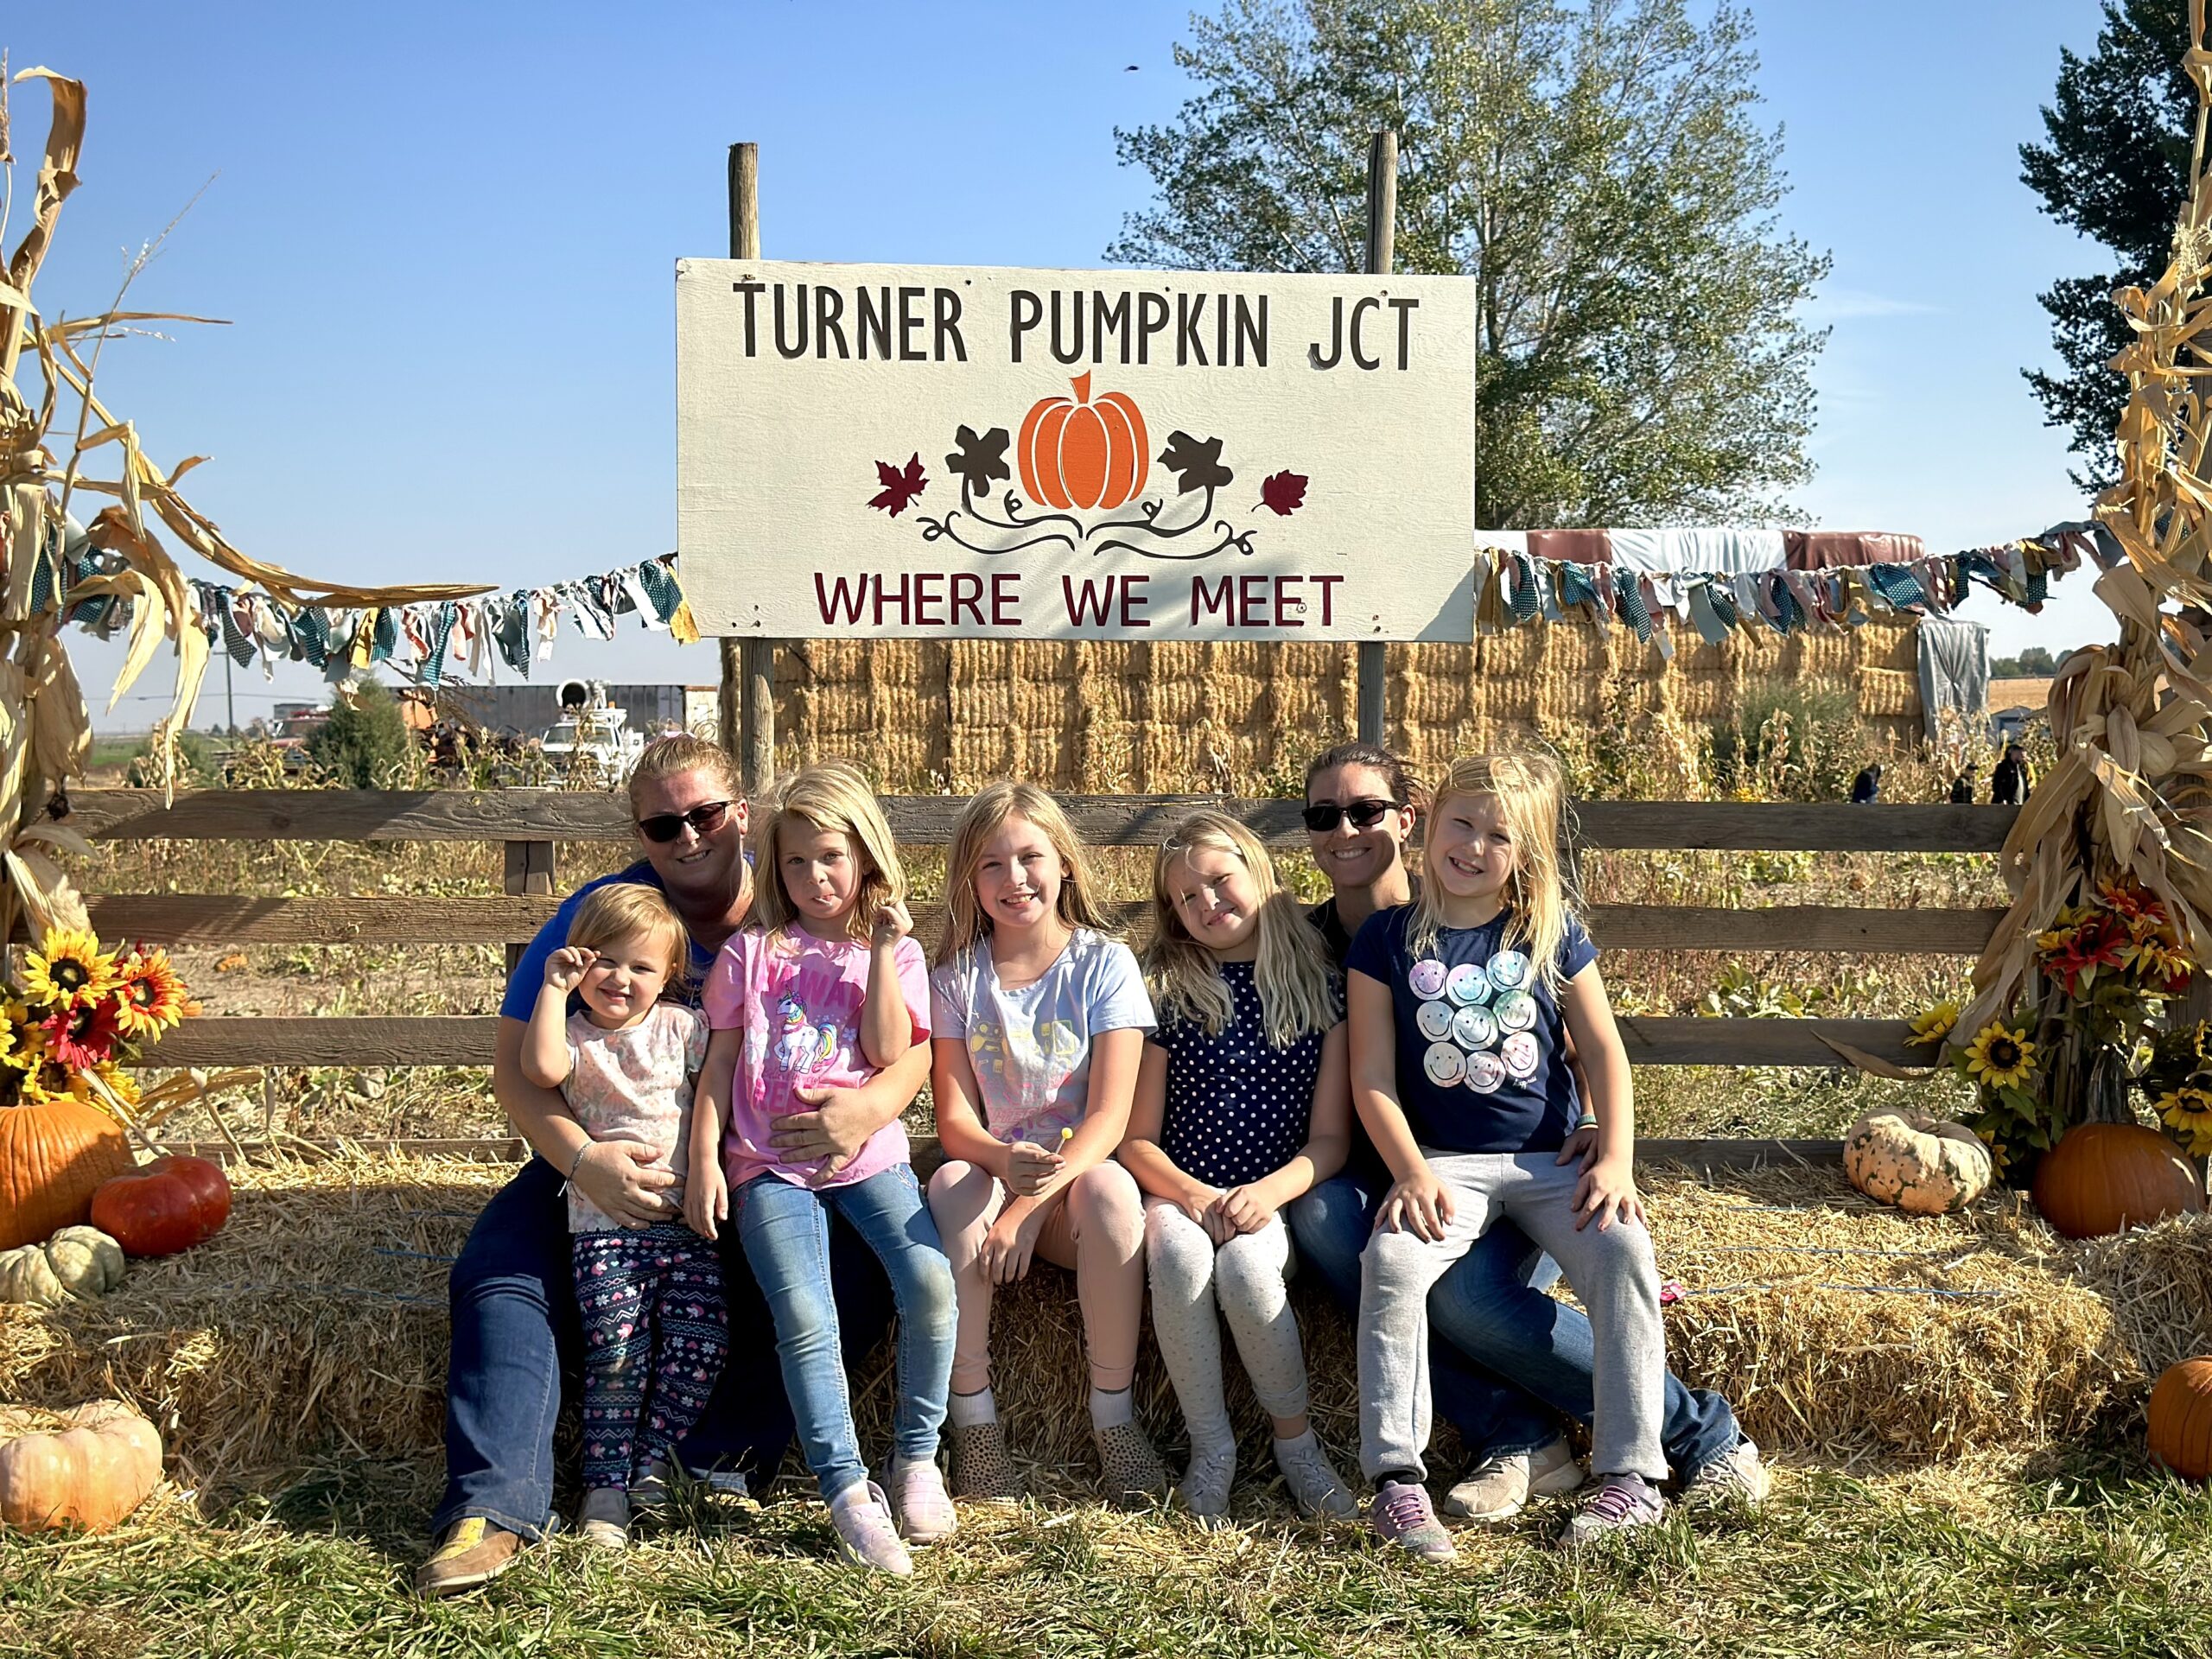 Turner pumpkin junction -077